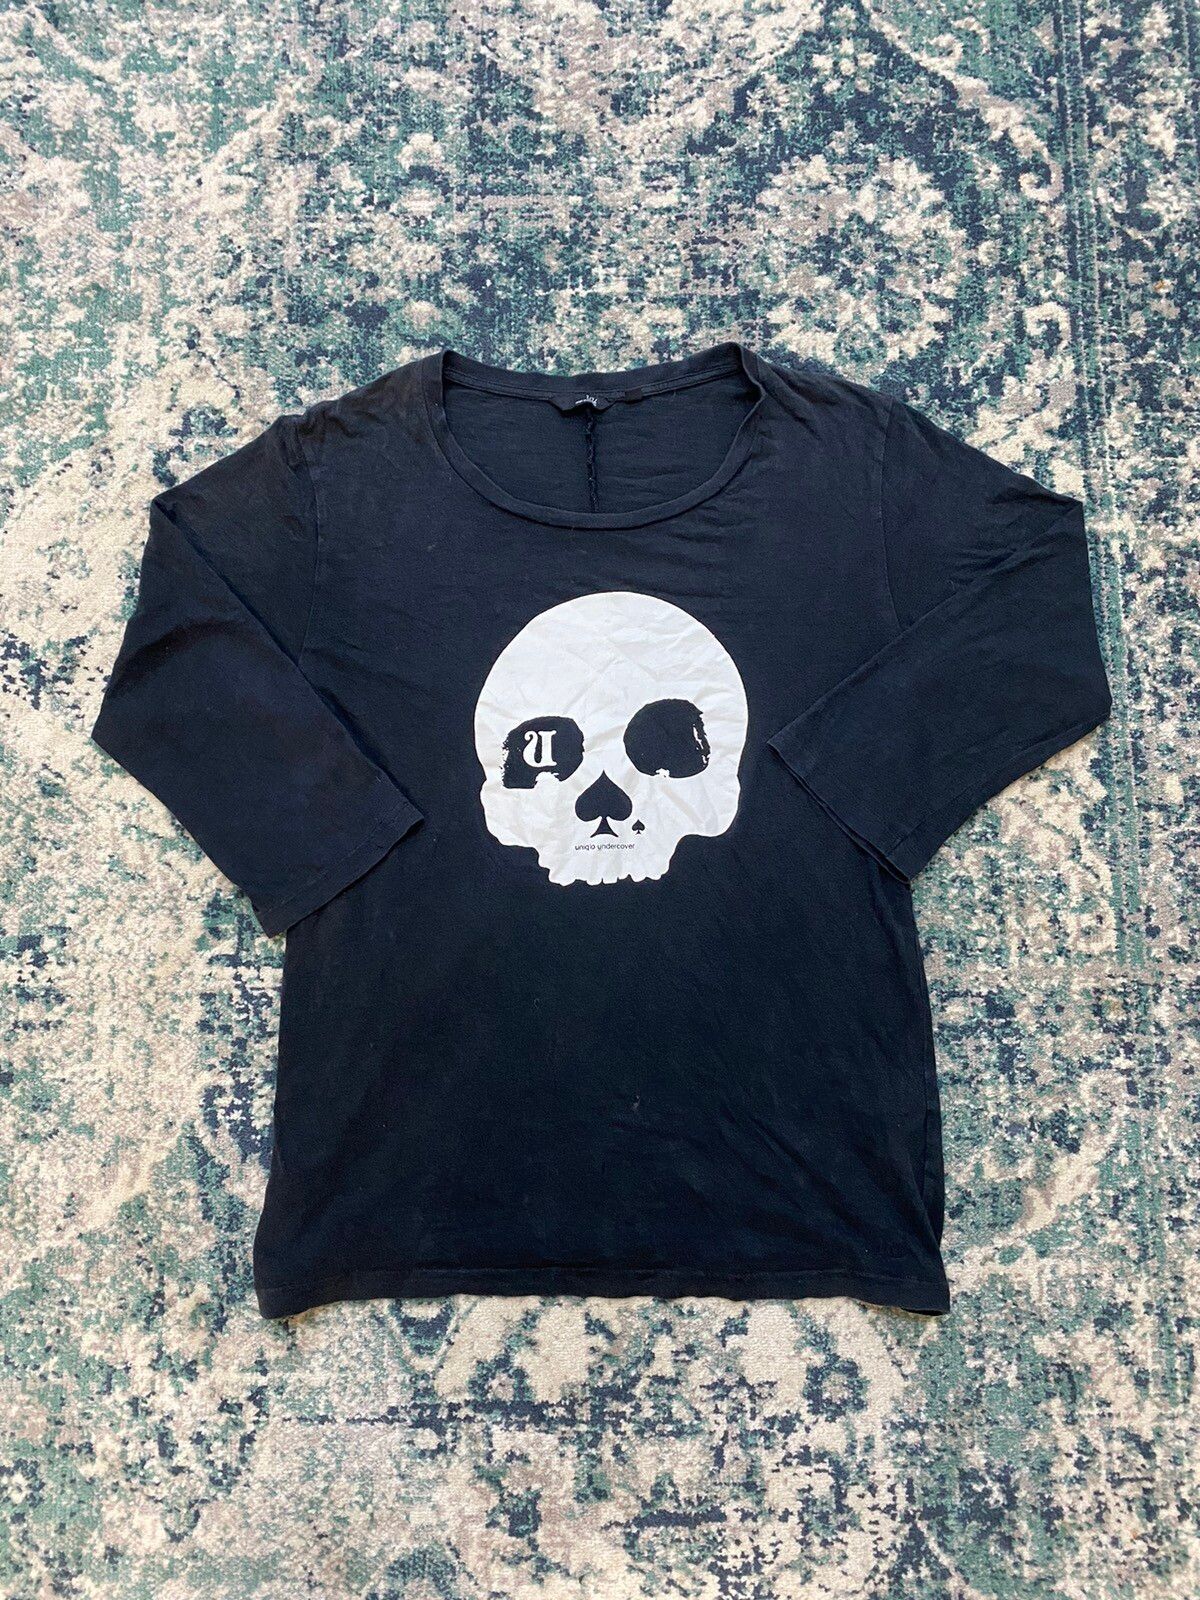 SS12 Undercover x Uniqlo Skull Shirt - 1